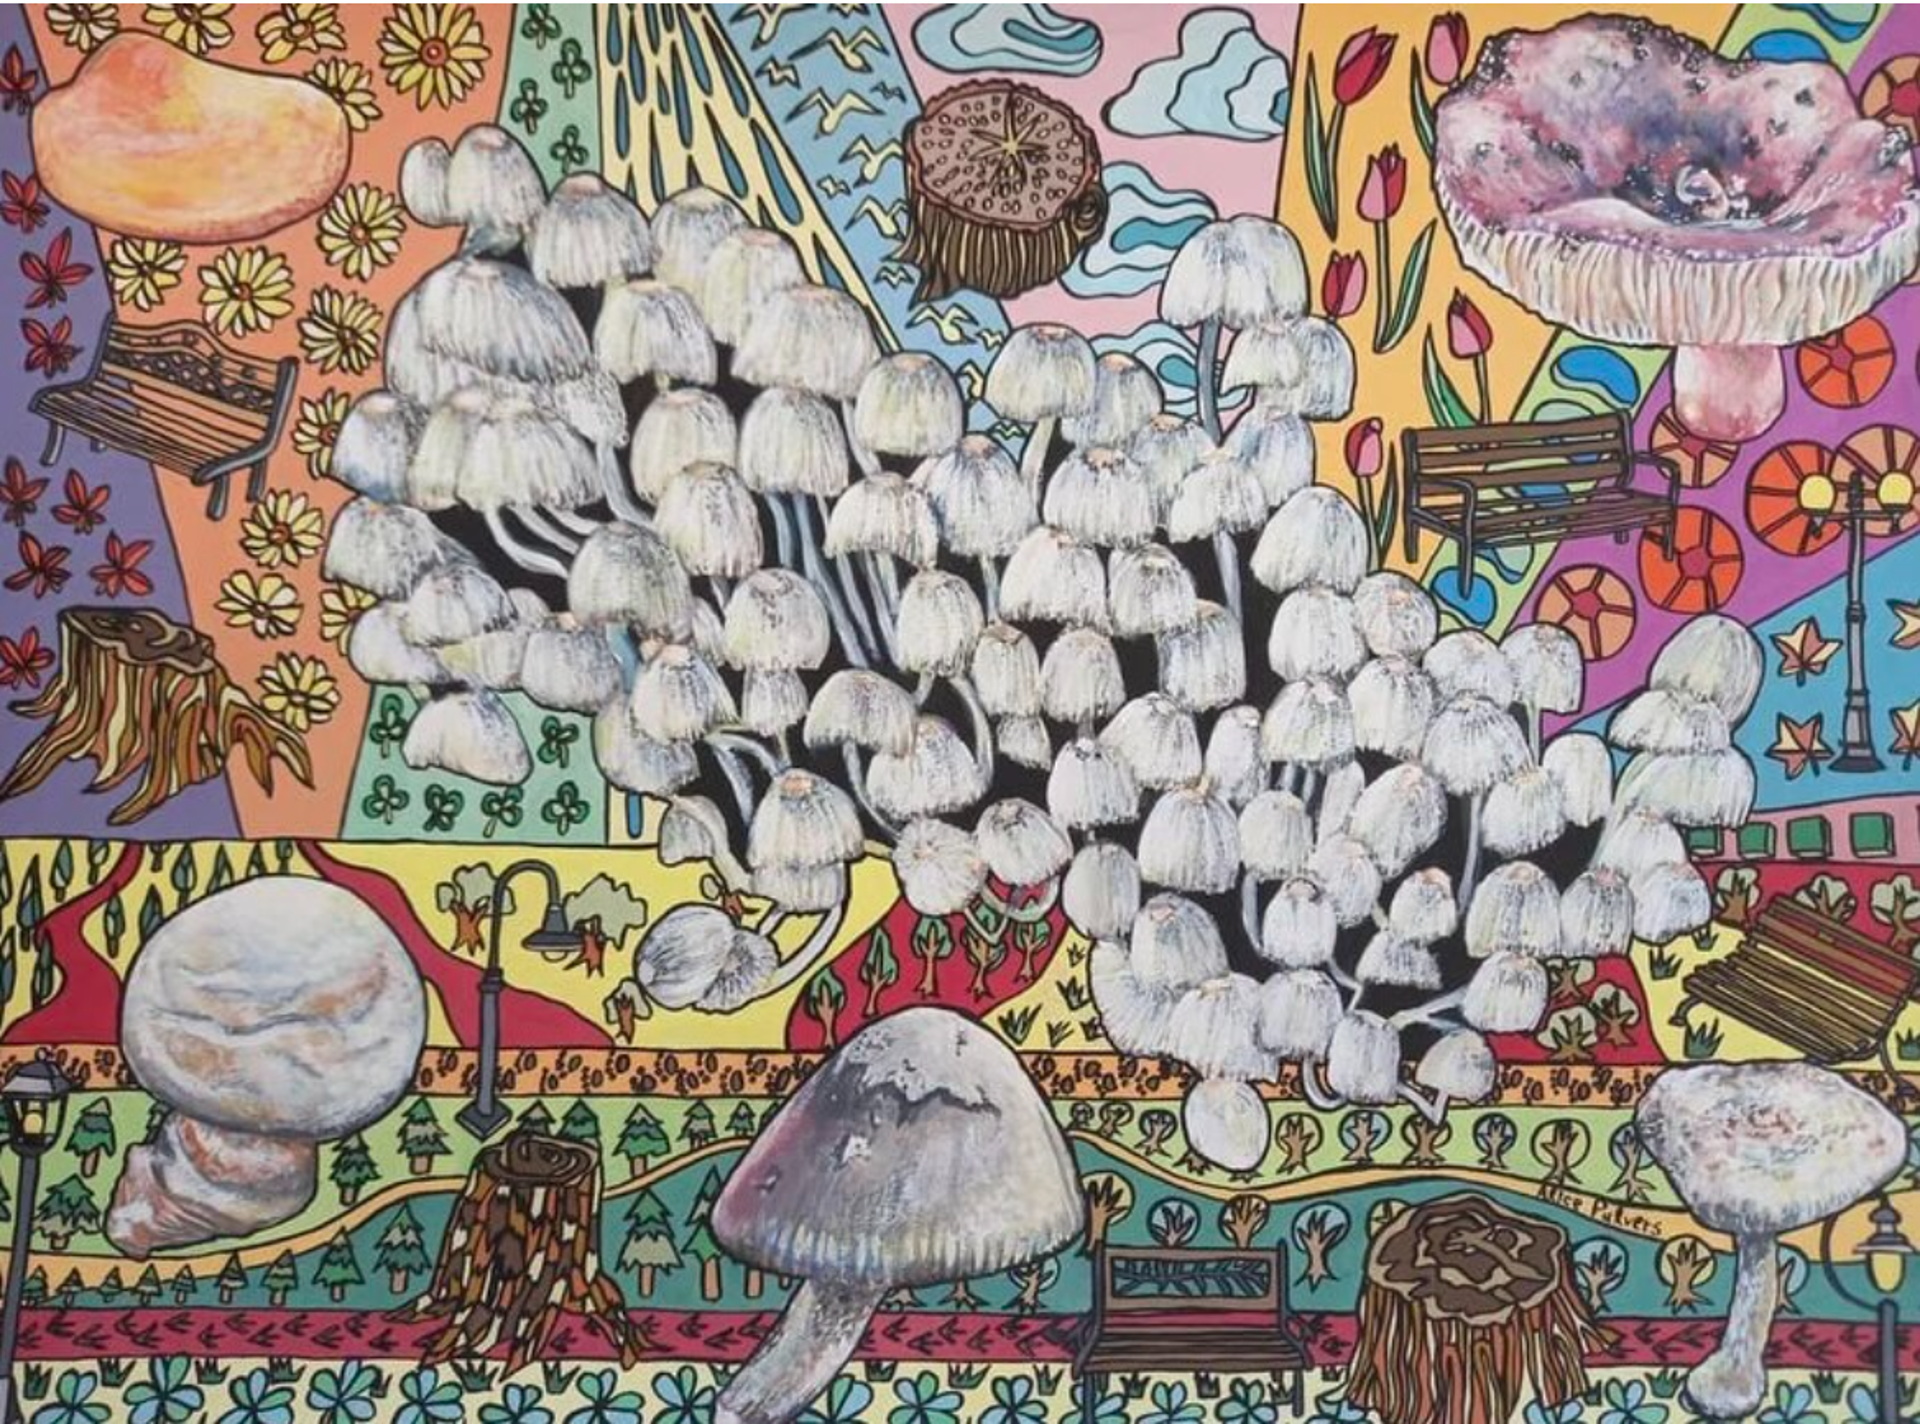 Mushrooms by Alice Pulvers